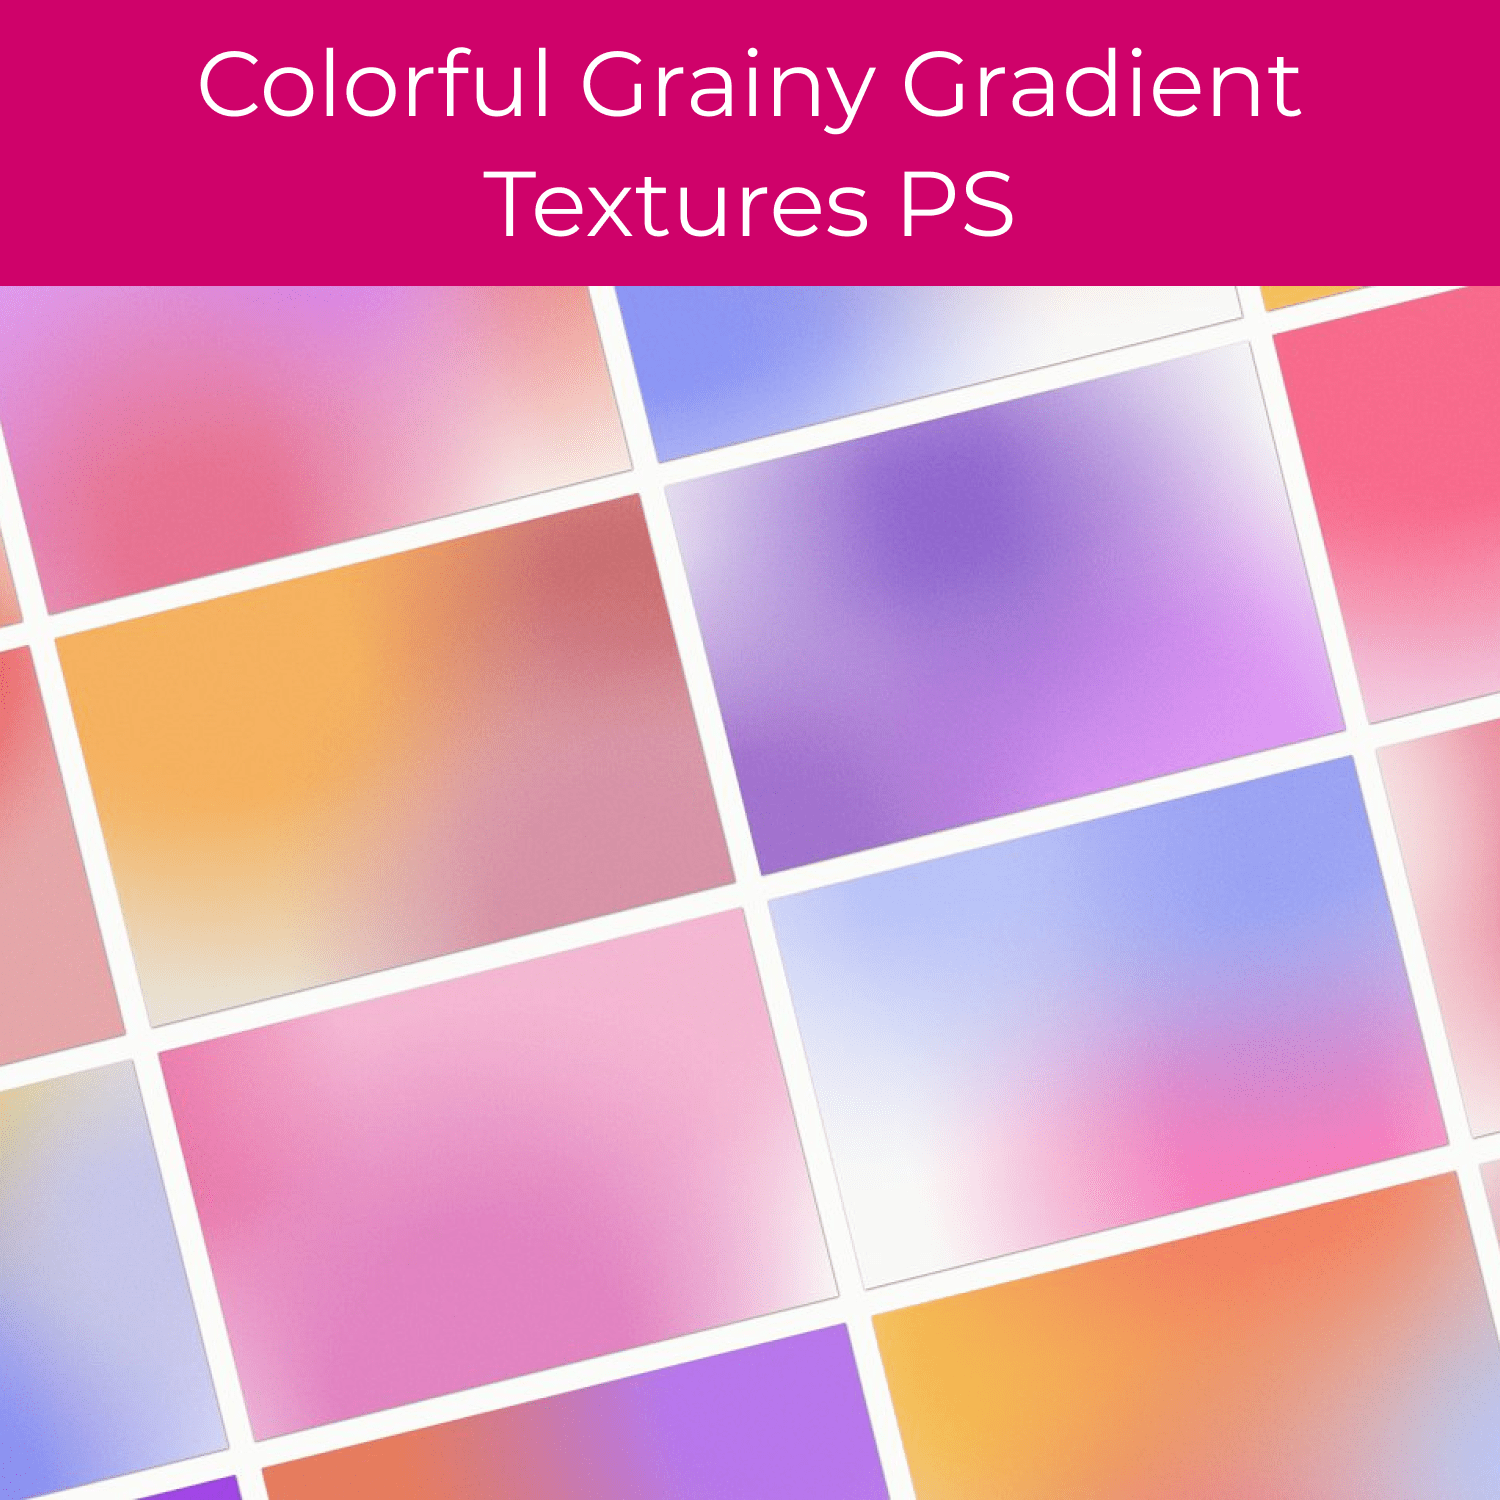 Colorful Grainy Gradient Textures PS.